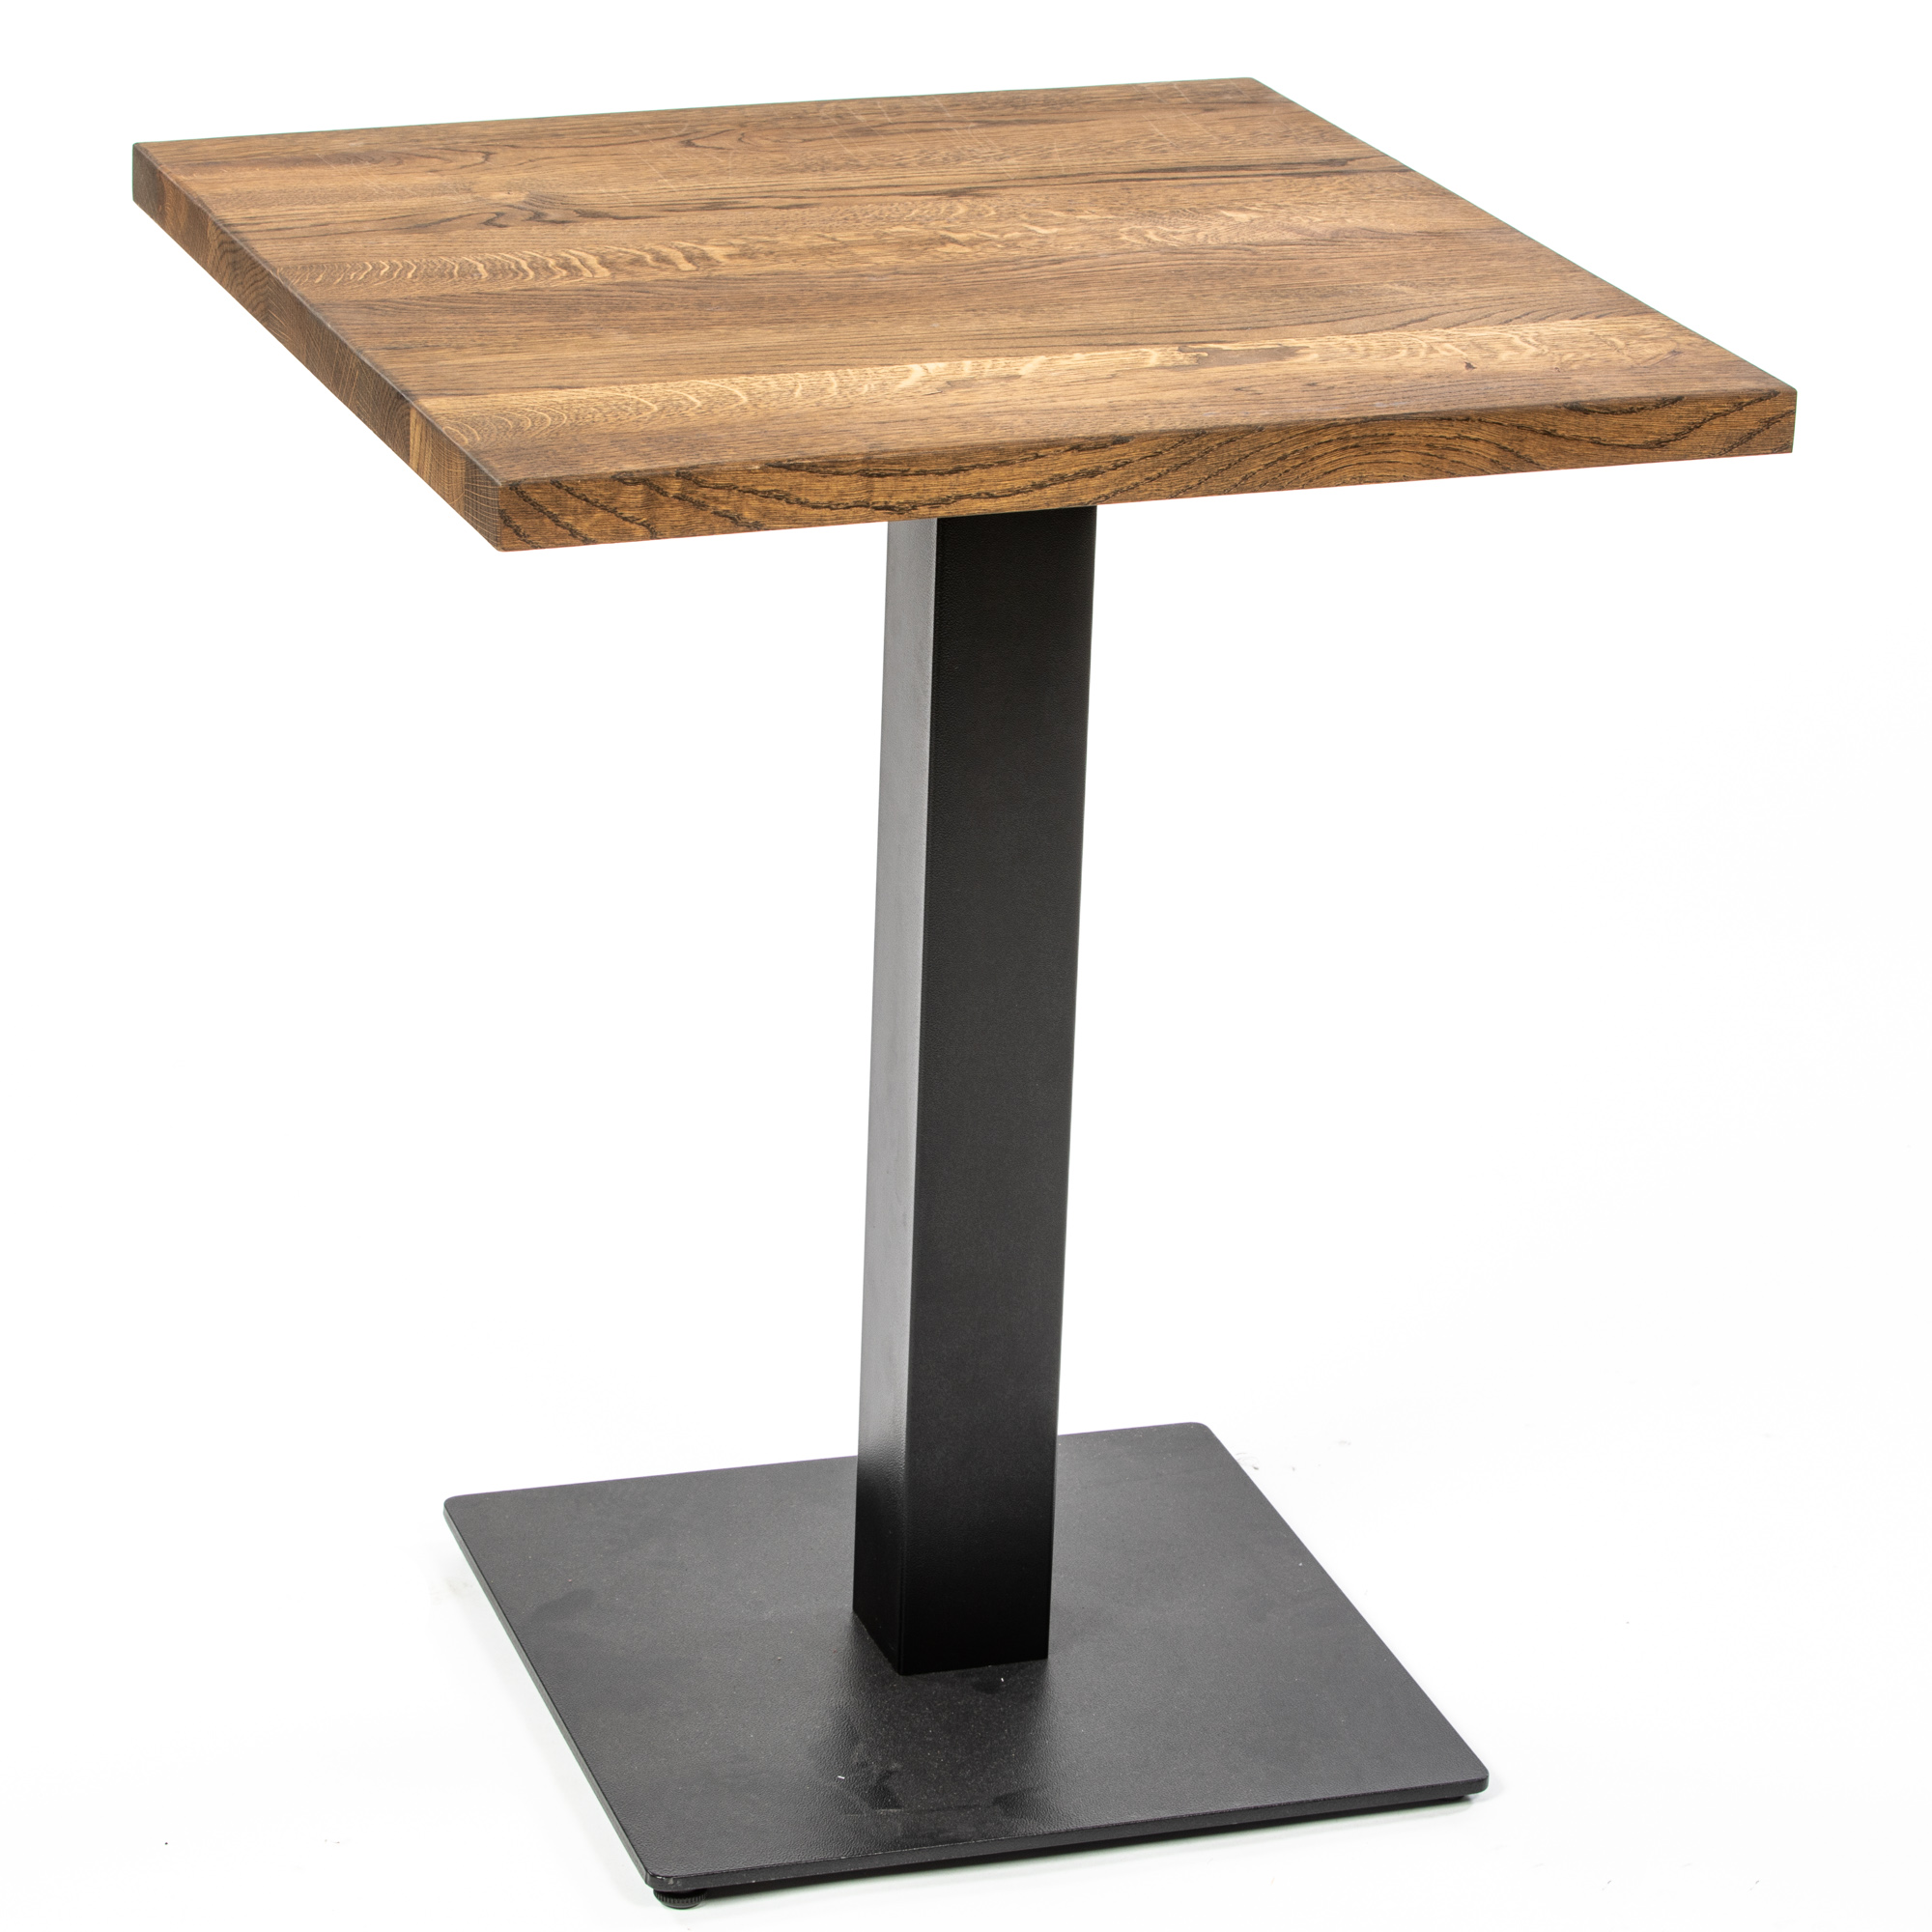 Massivholz Tischplatte ELEGANT OILED, Eiche geölt, viele Formate, Stärke 30 mm, rustikale Ausführung